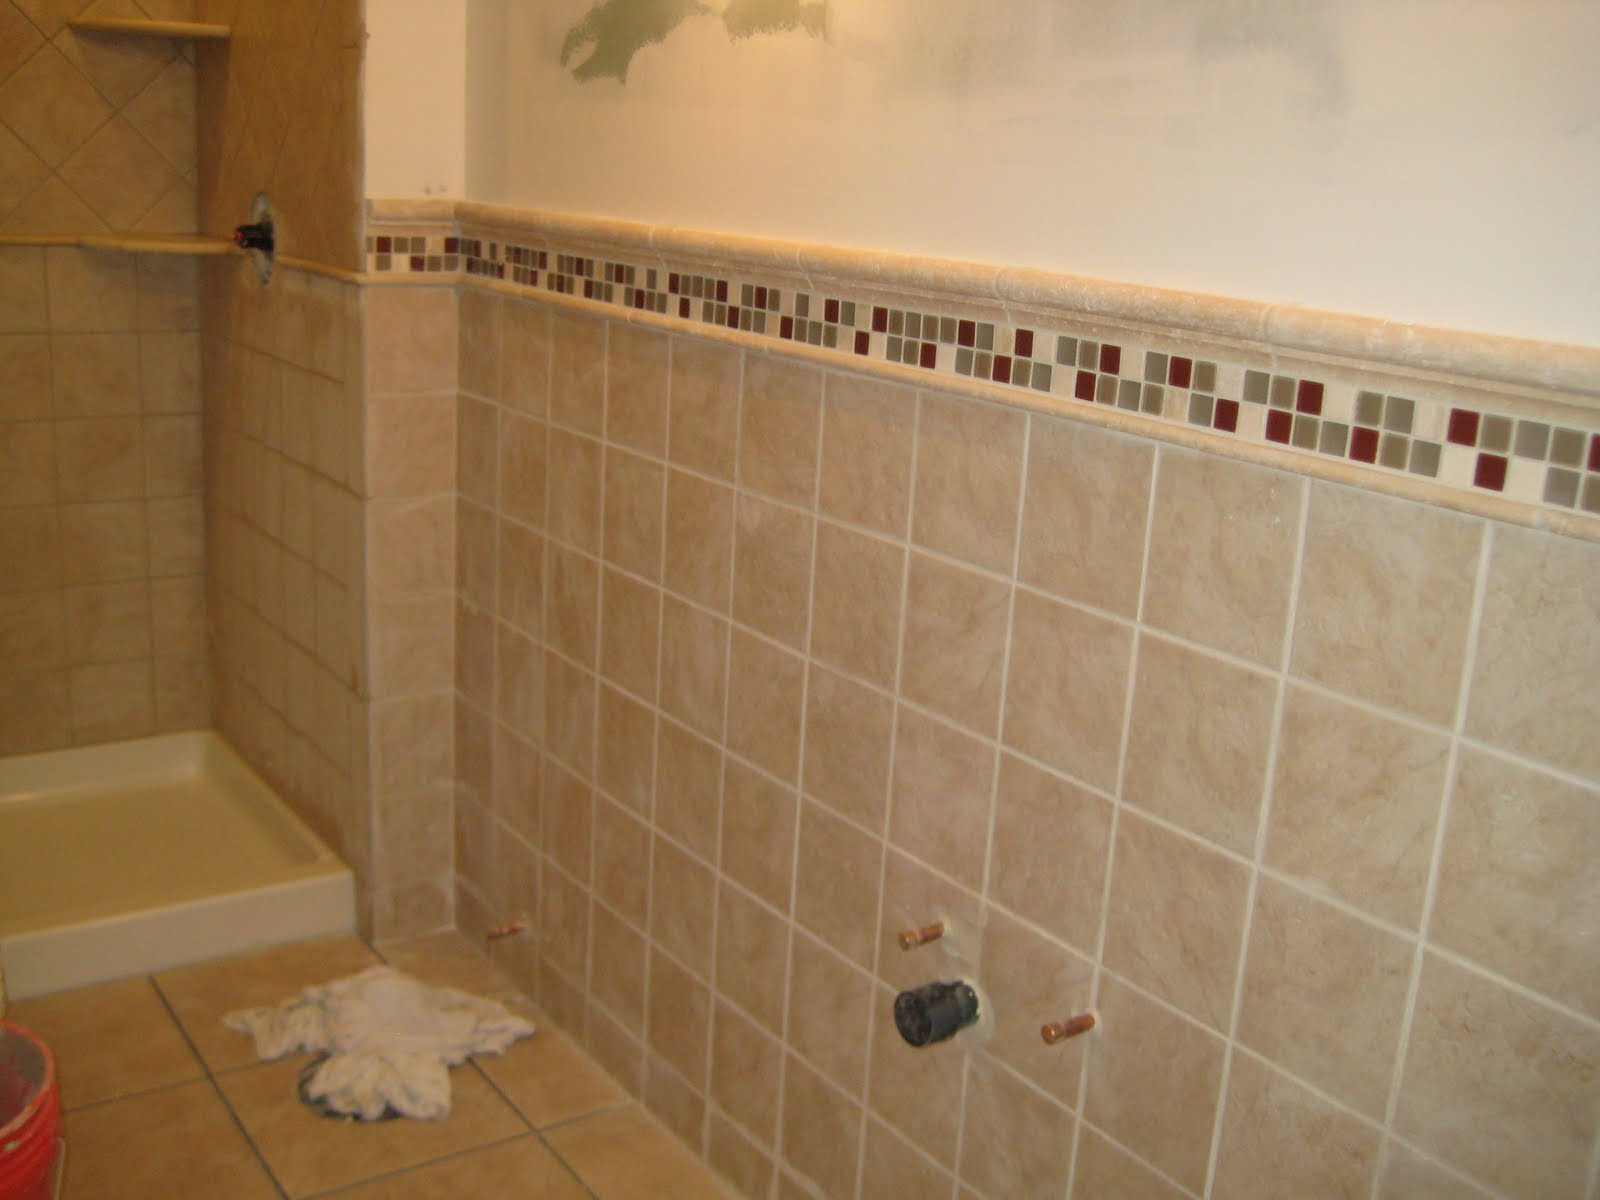 Bathroom Tile Patterns Shower
 plete Home Remodeling and Construction 856 956 6425